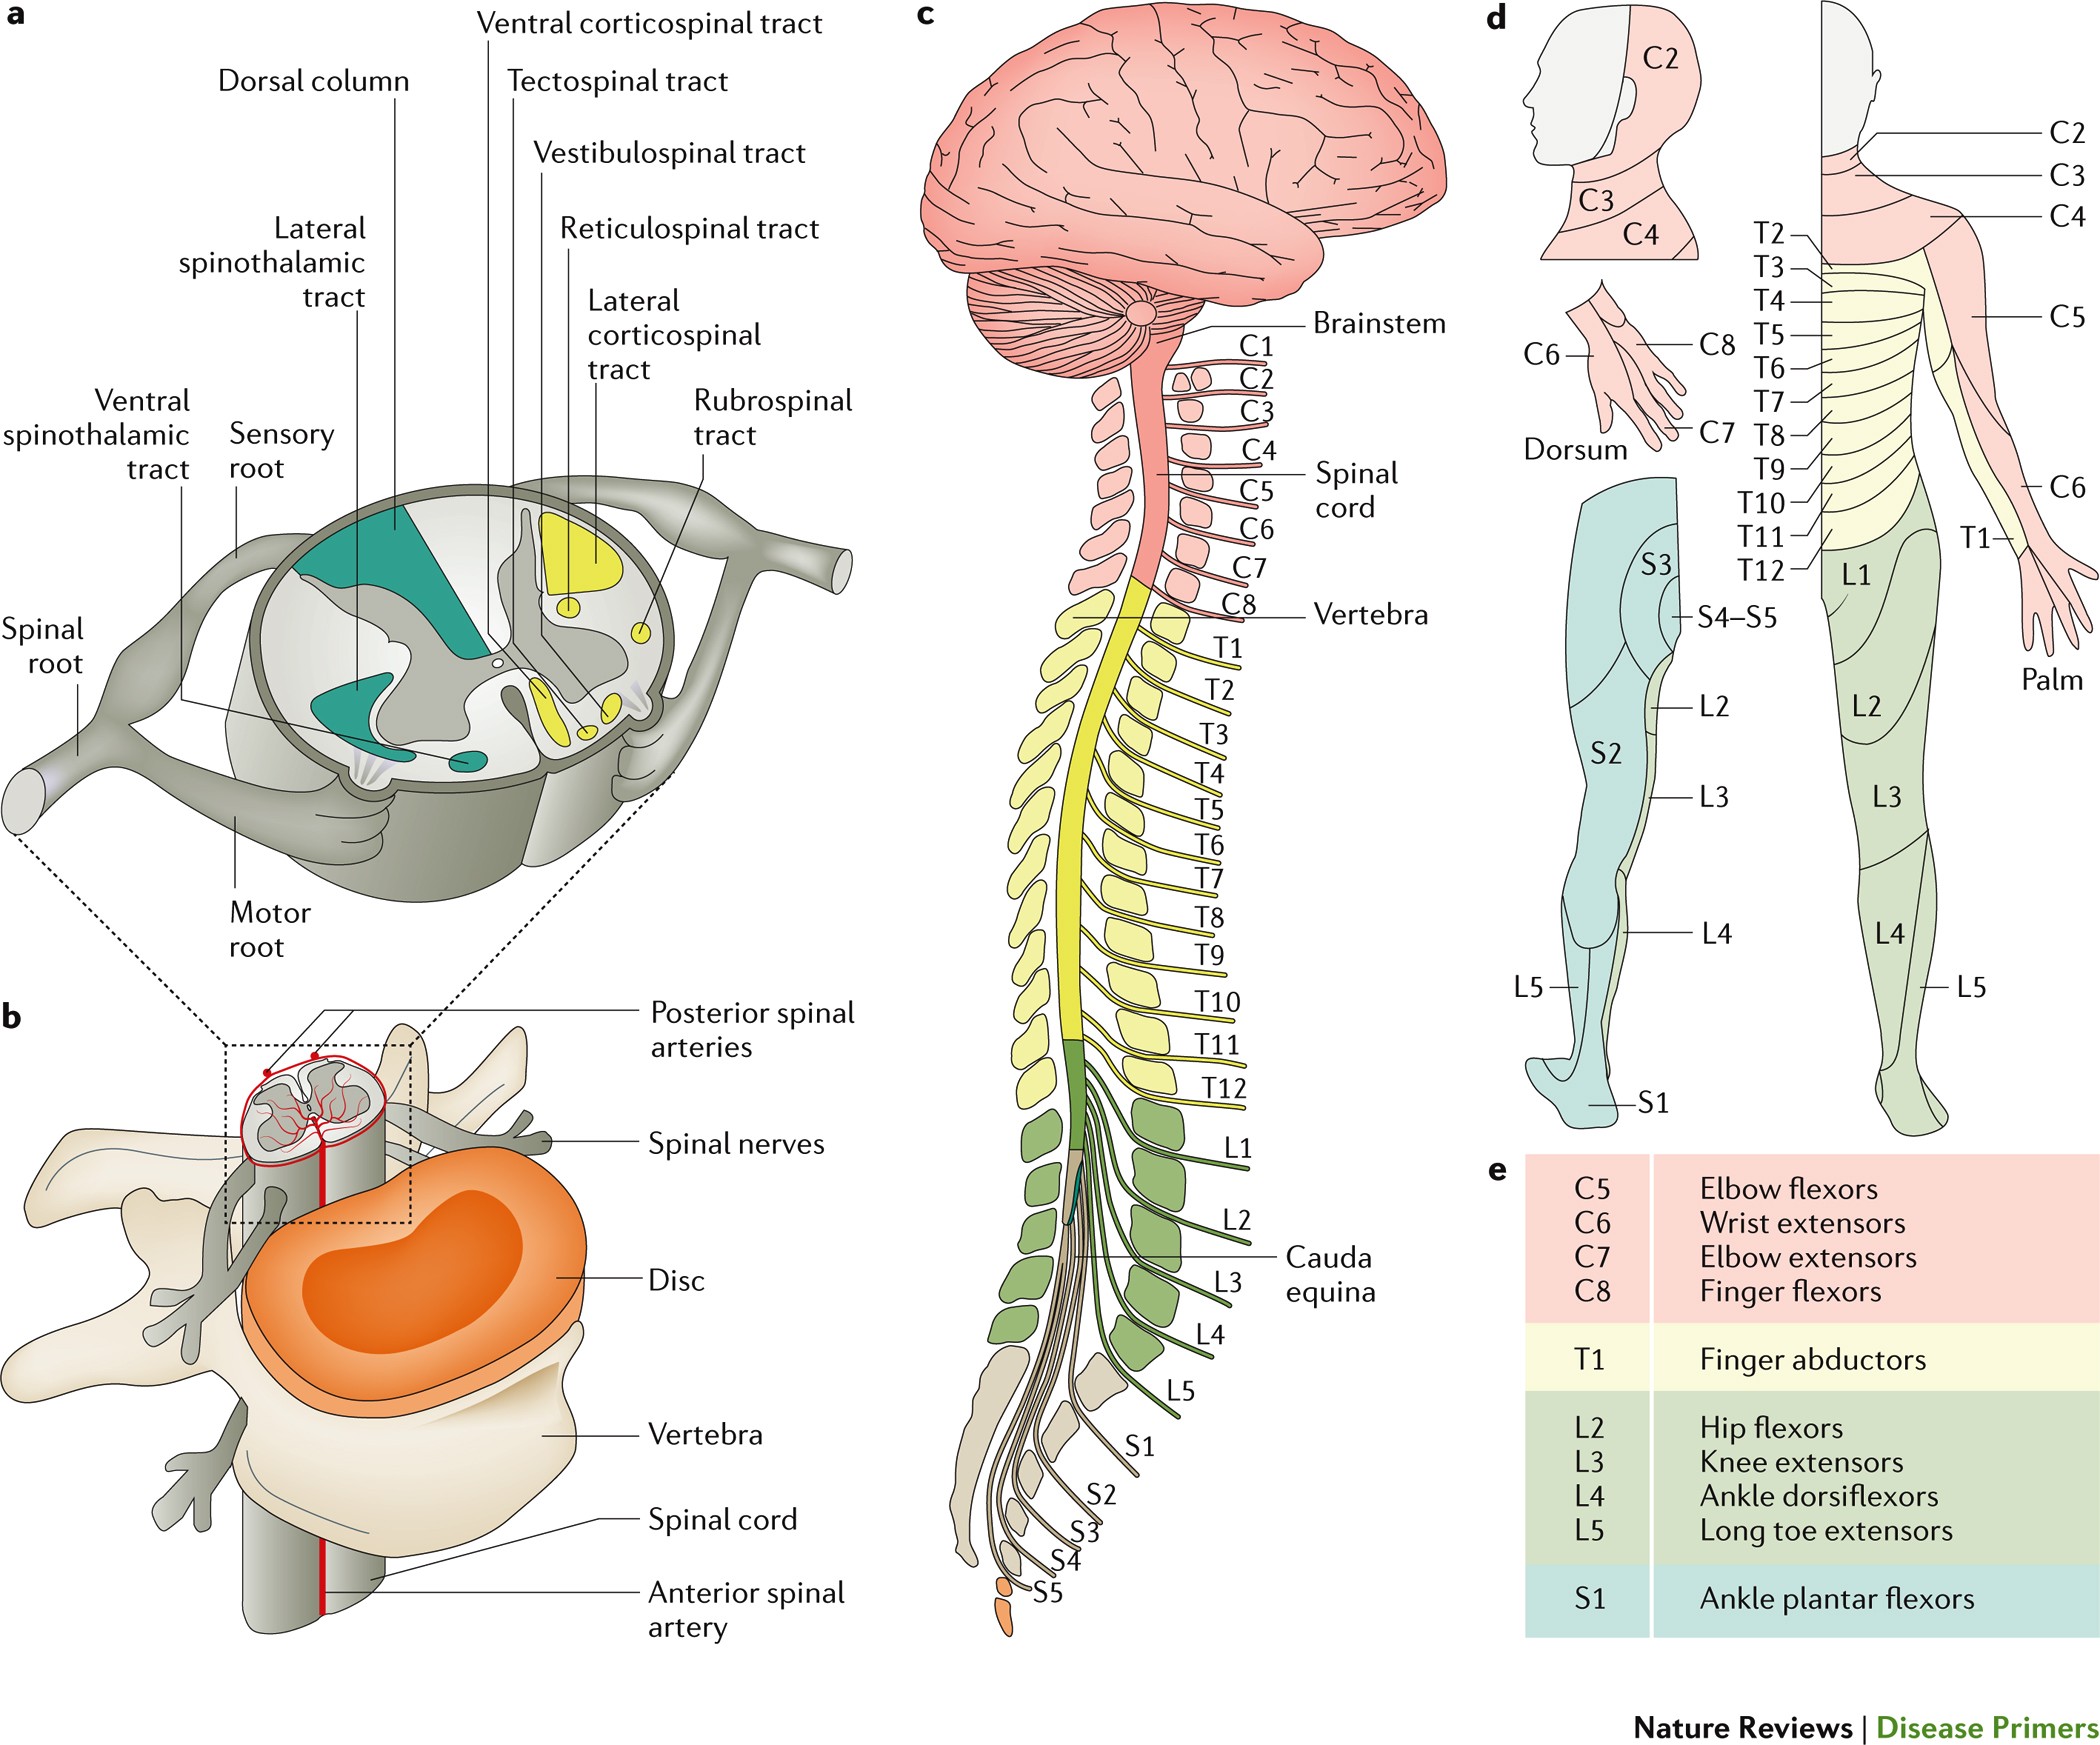 Traumatic spinal cord injury | Nature Reviews Disease Primers